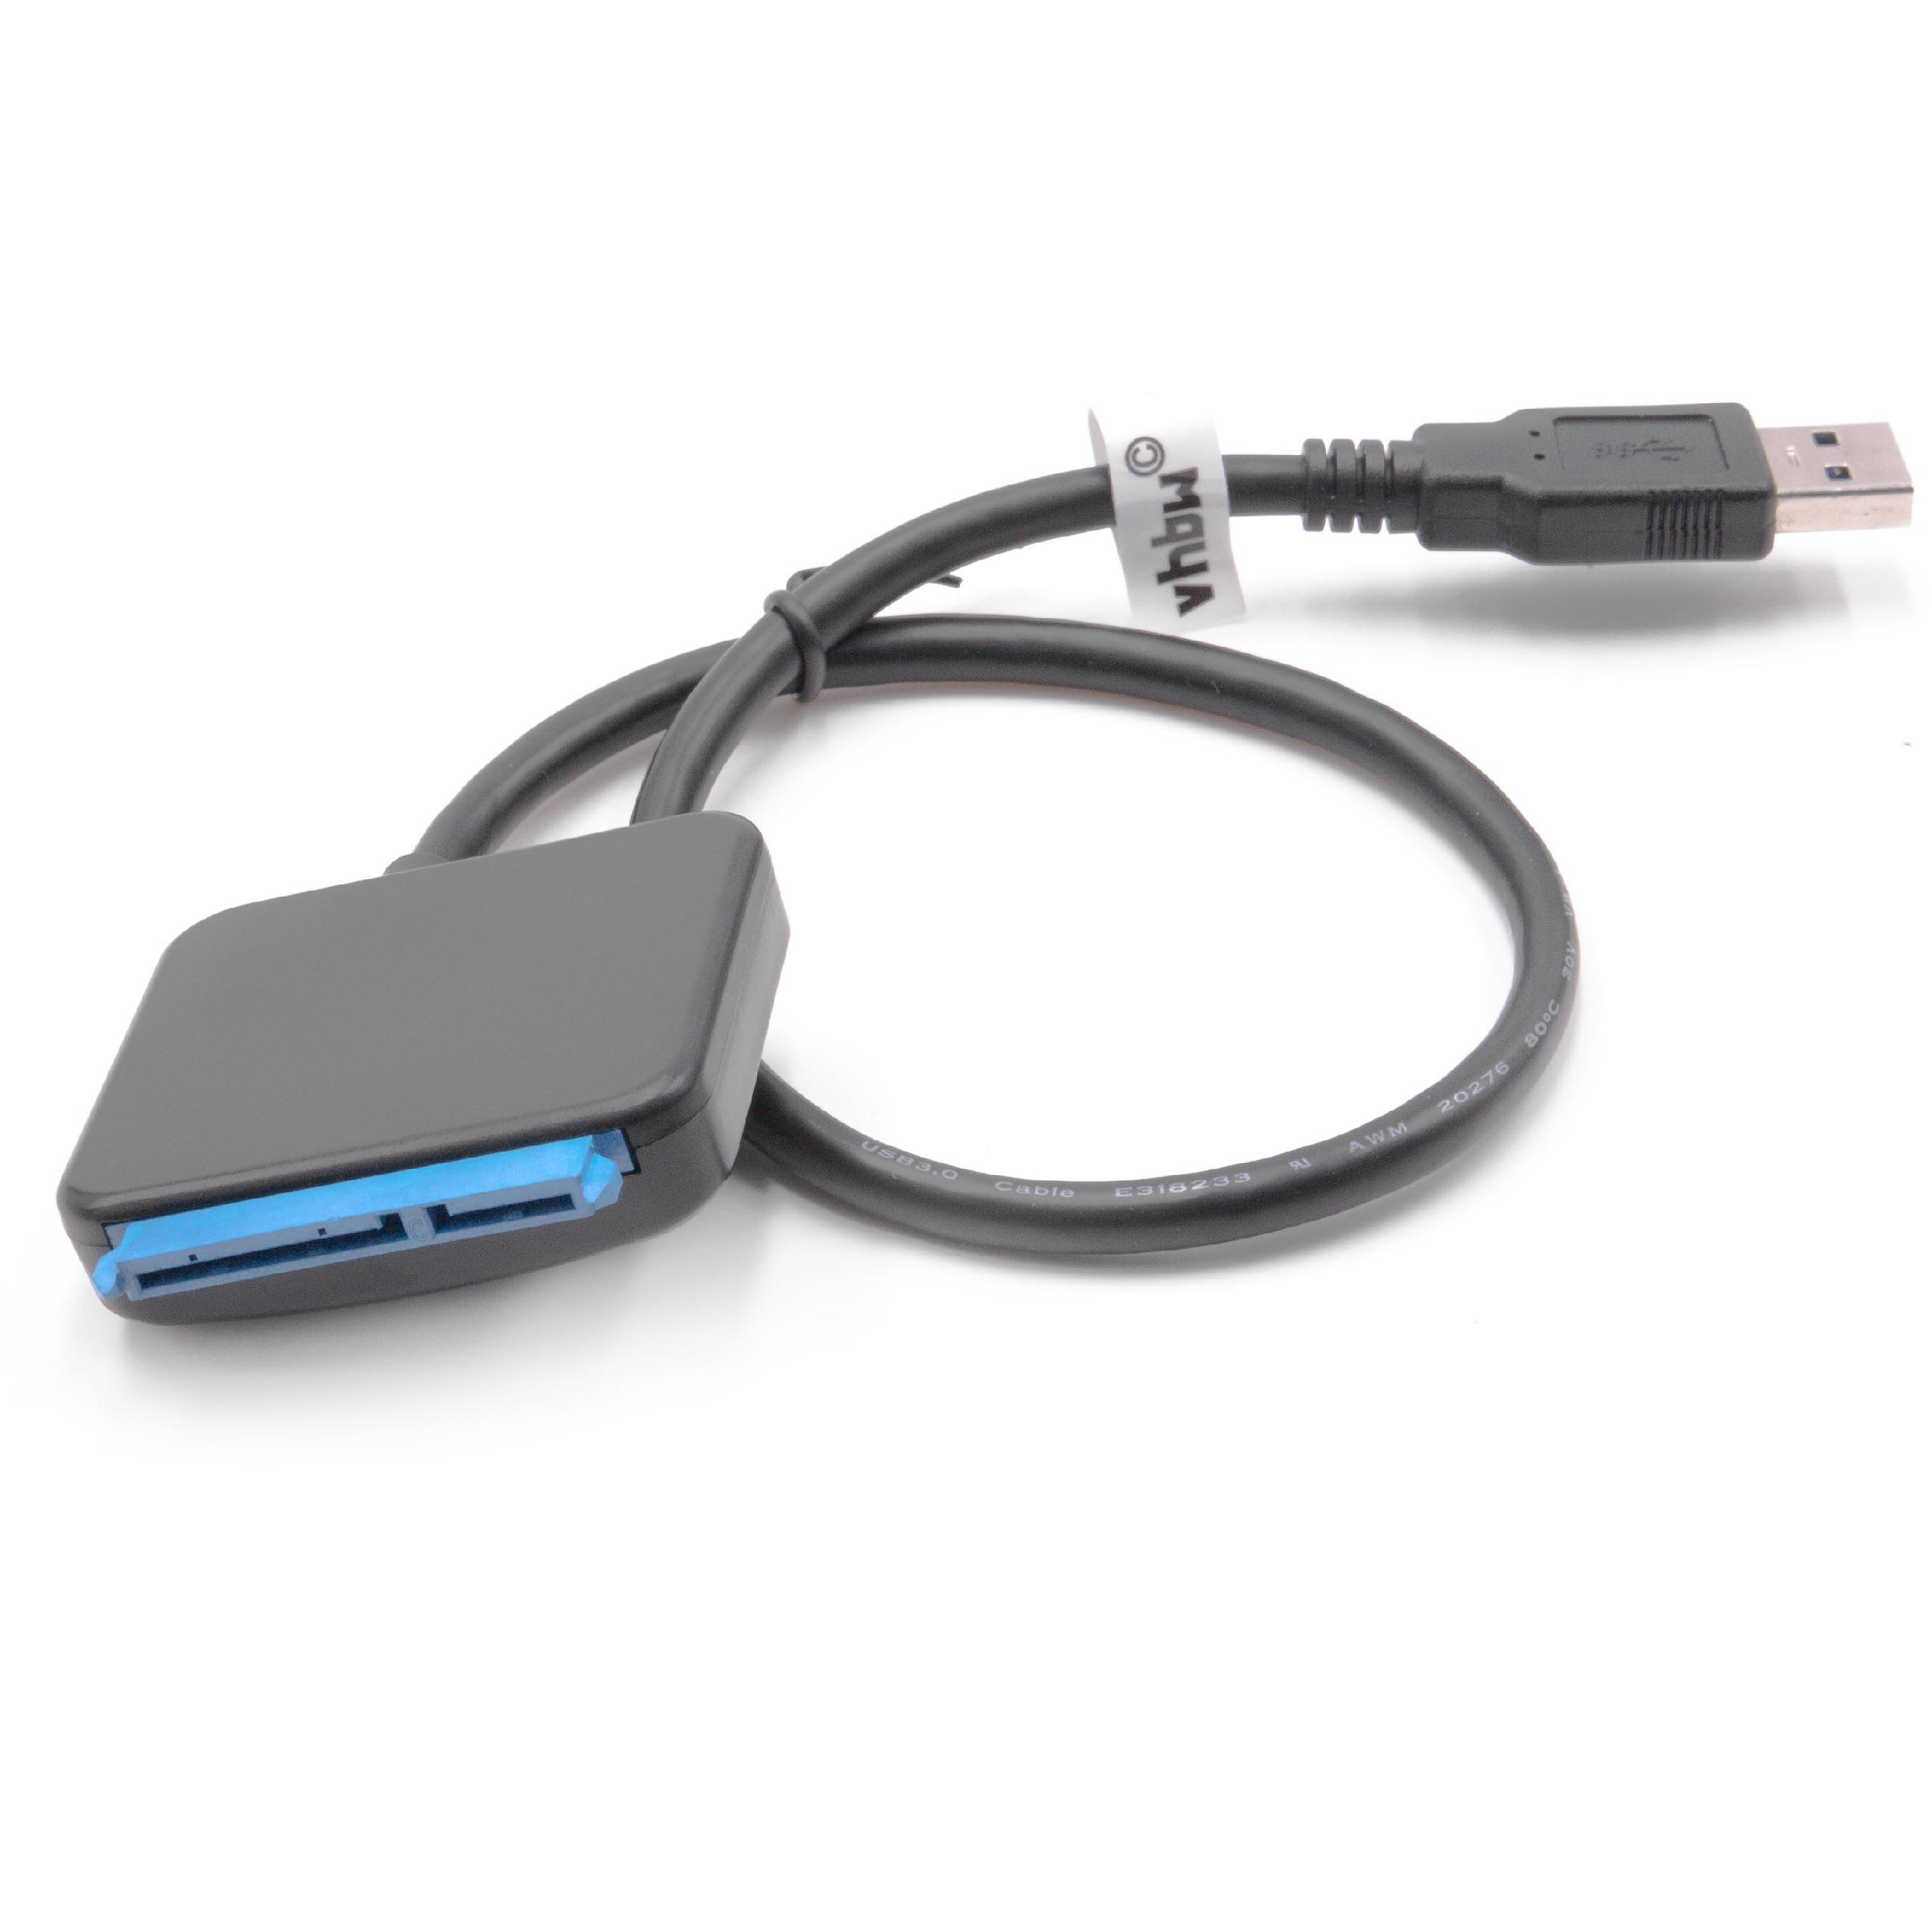 SATA III a USB 3.0 Cable adaptador de disco duro, cable de conexión para HDD, SSDdiscos duros, con capacidad P